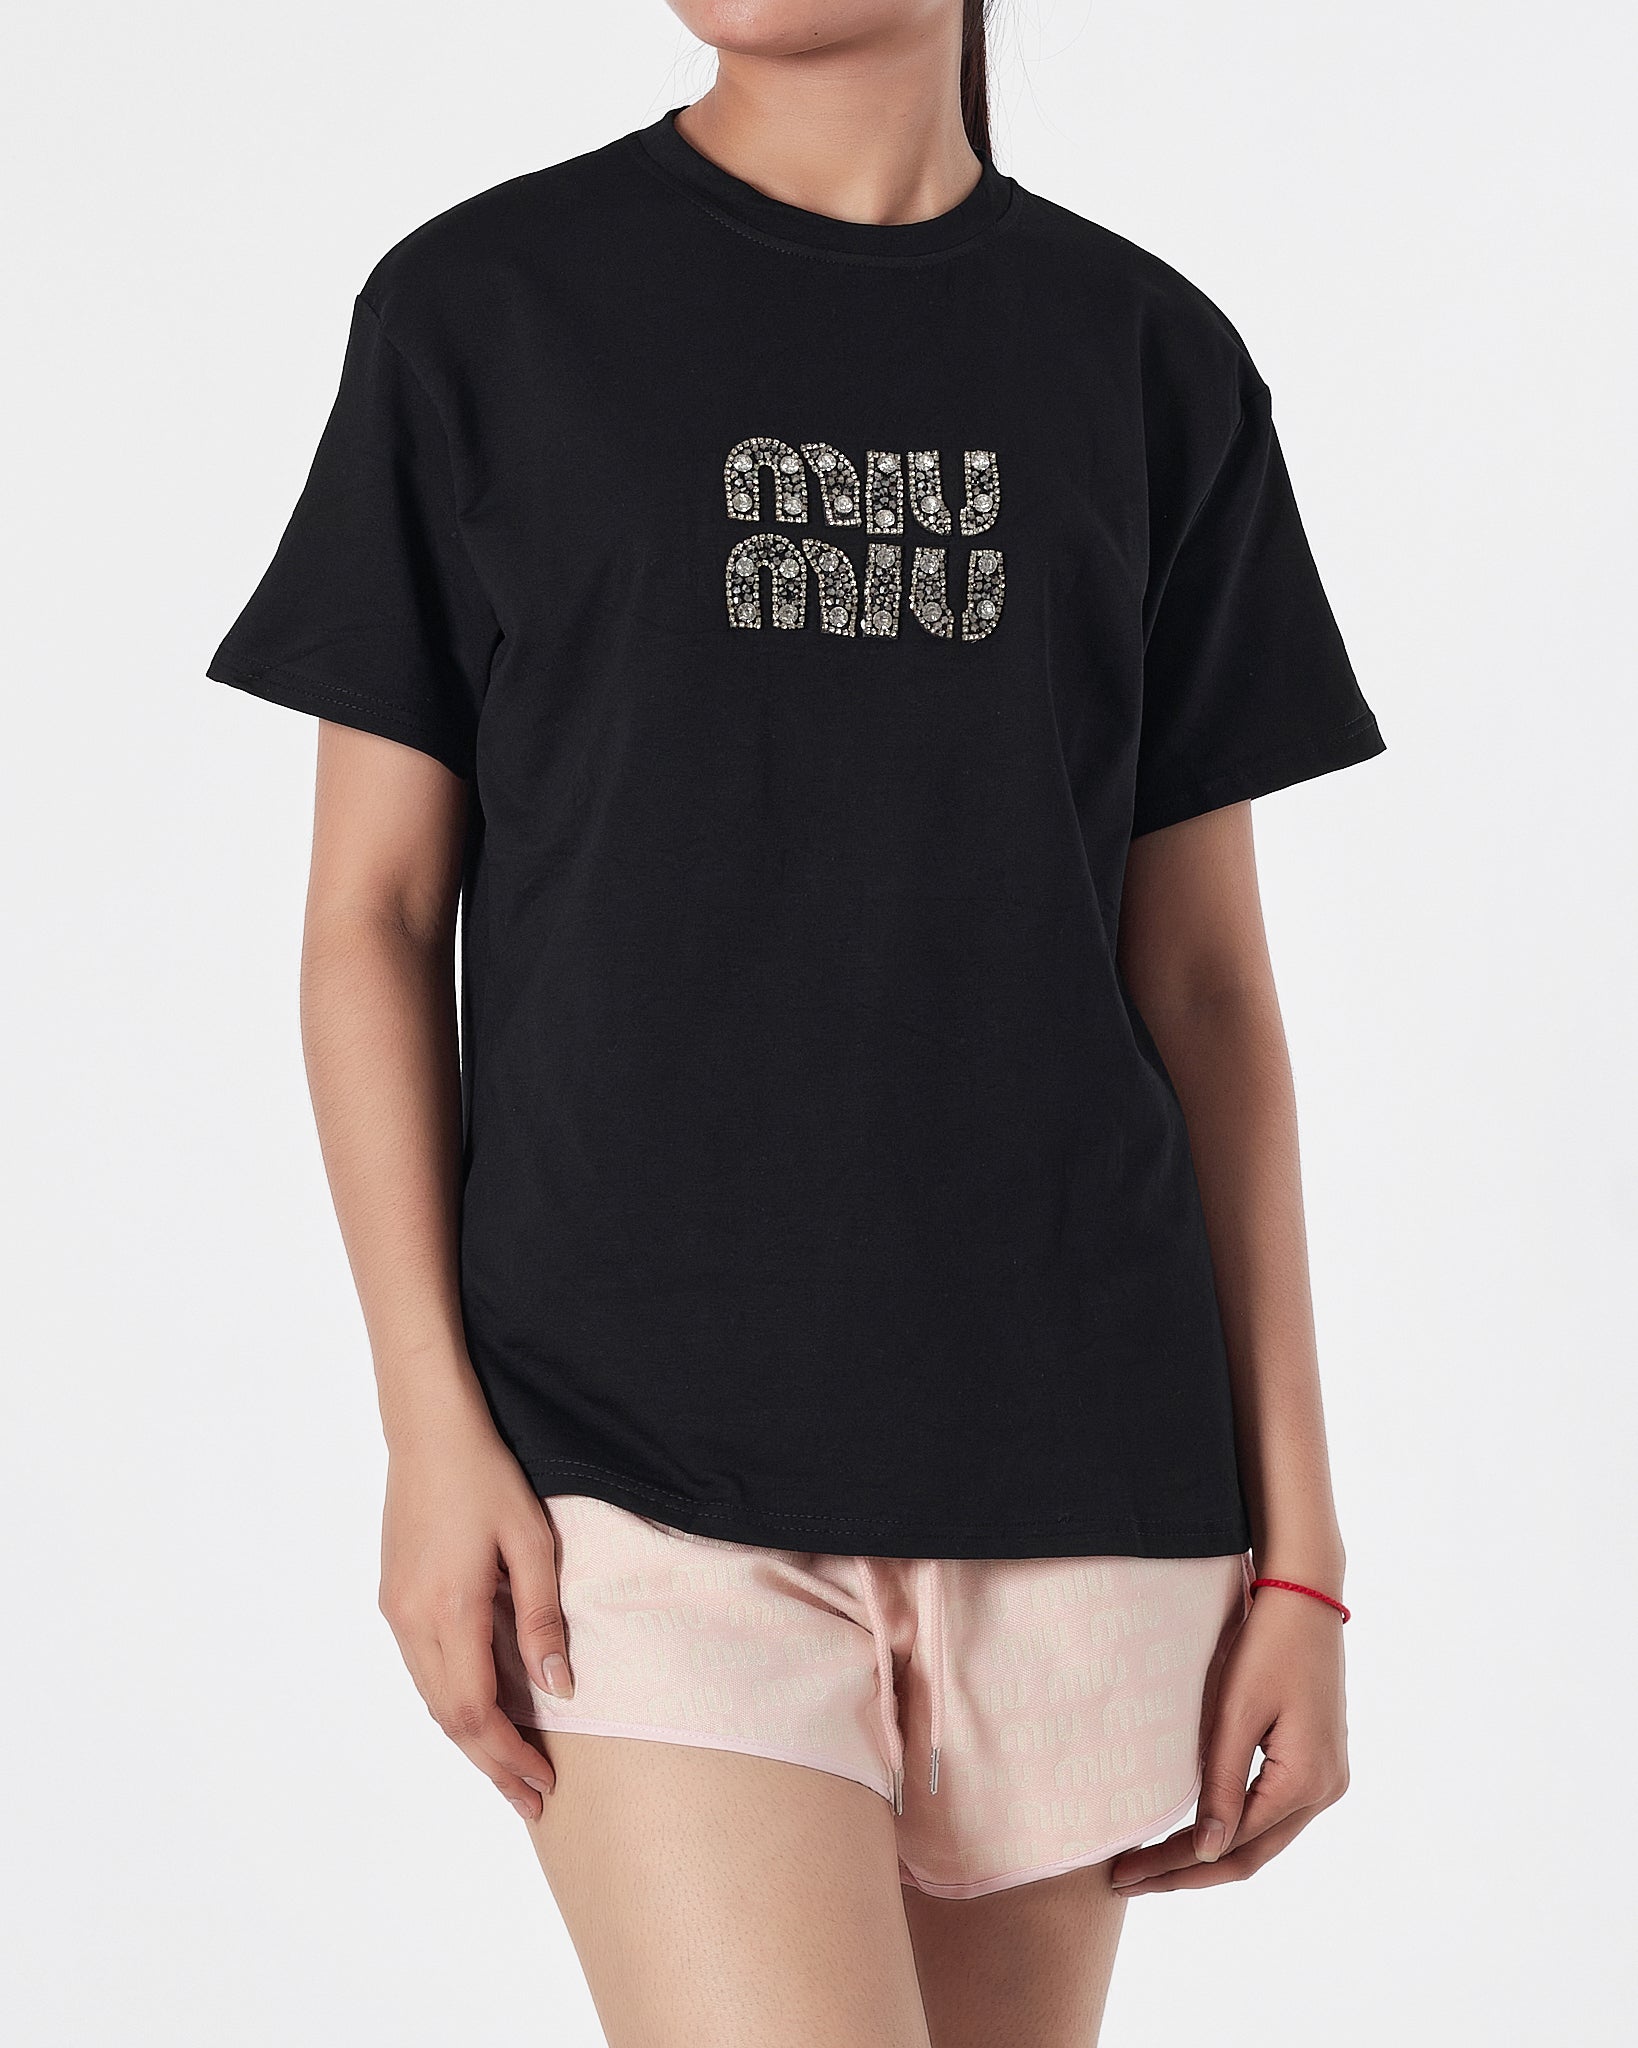 MIU MIU Lady Black T-Shirt + Shorts 2 Piece Outfit 20.90